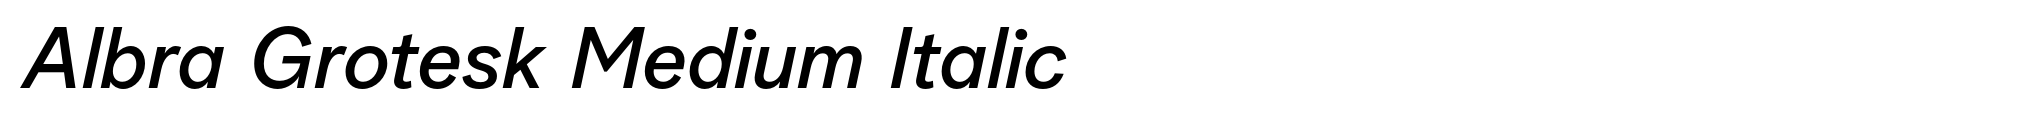 Albra Grotesk Medium Italic image